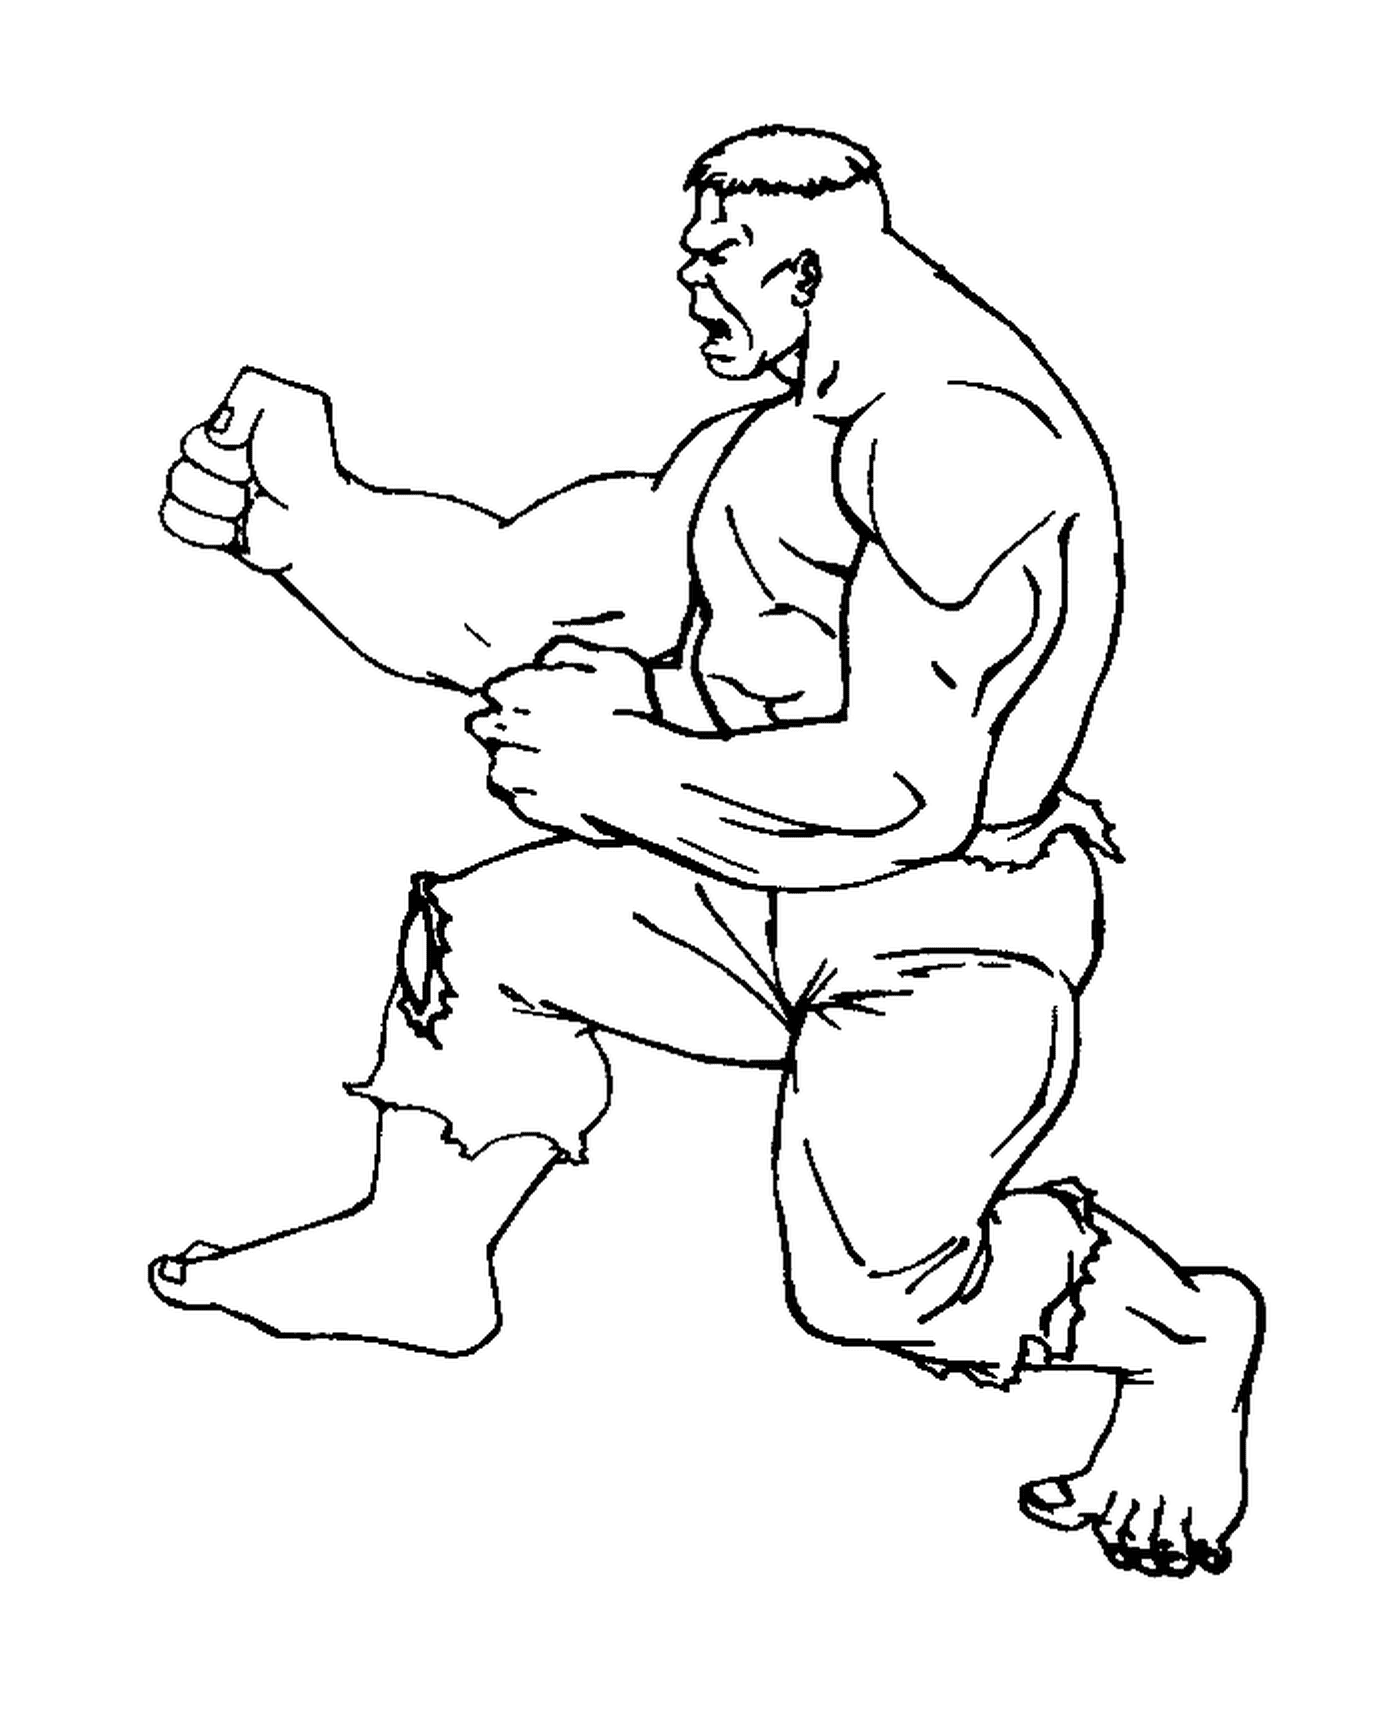  Hulk practica karate 